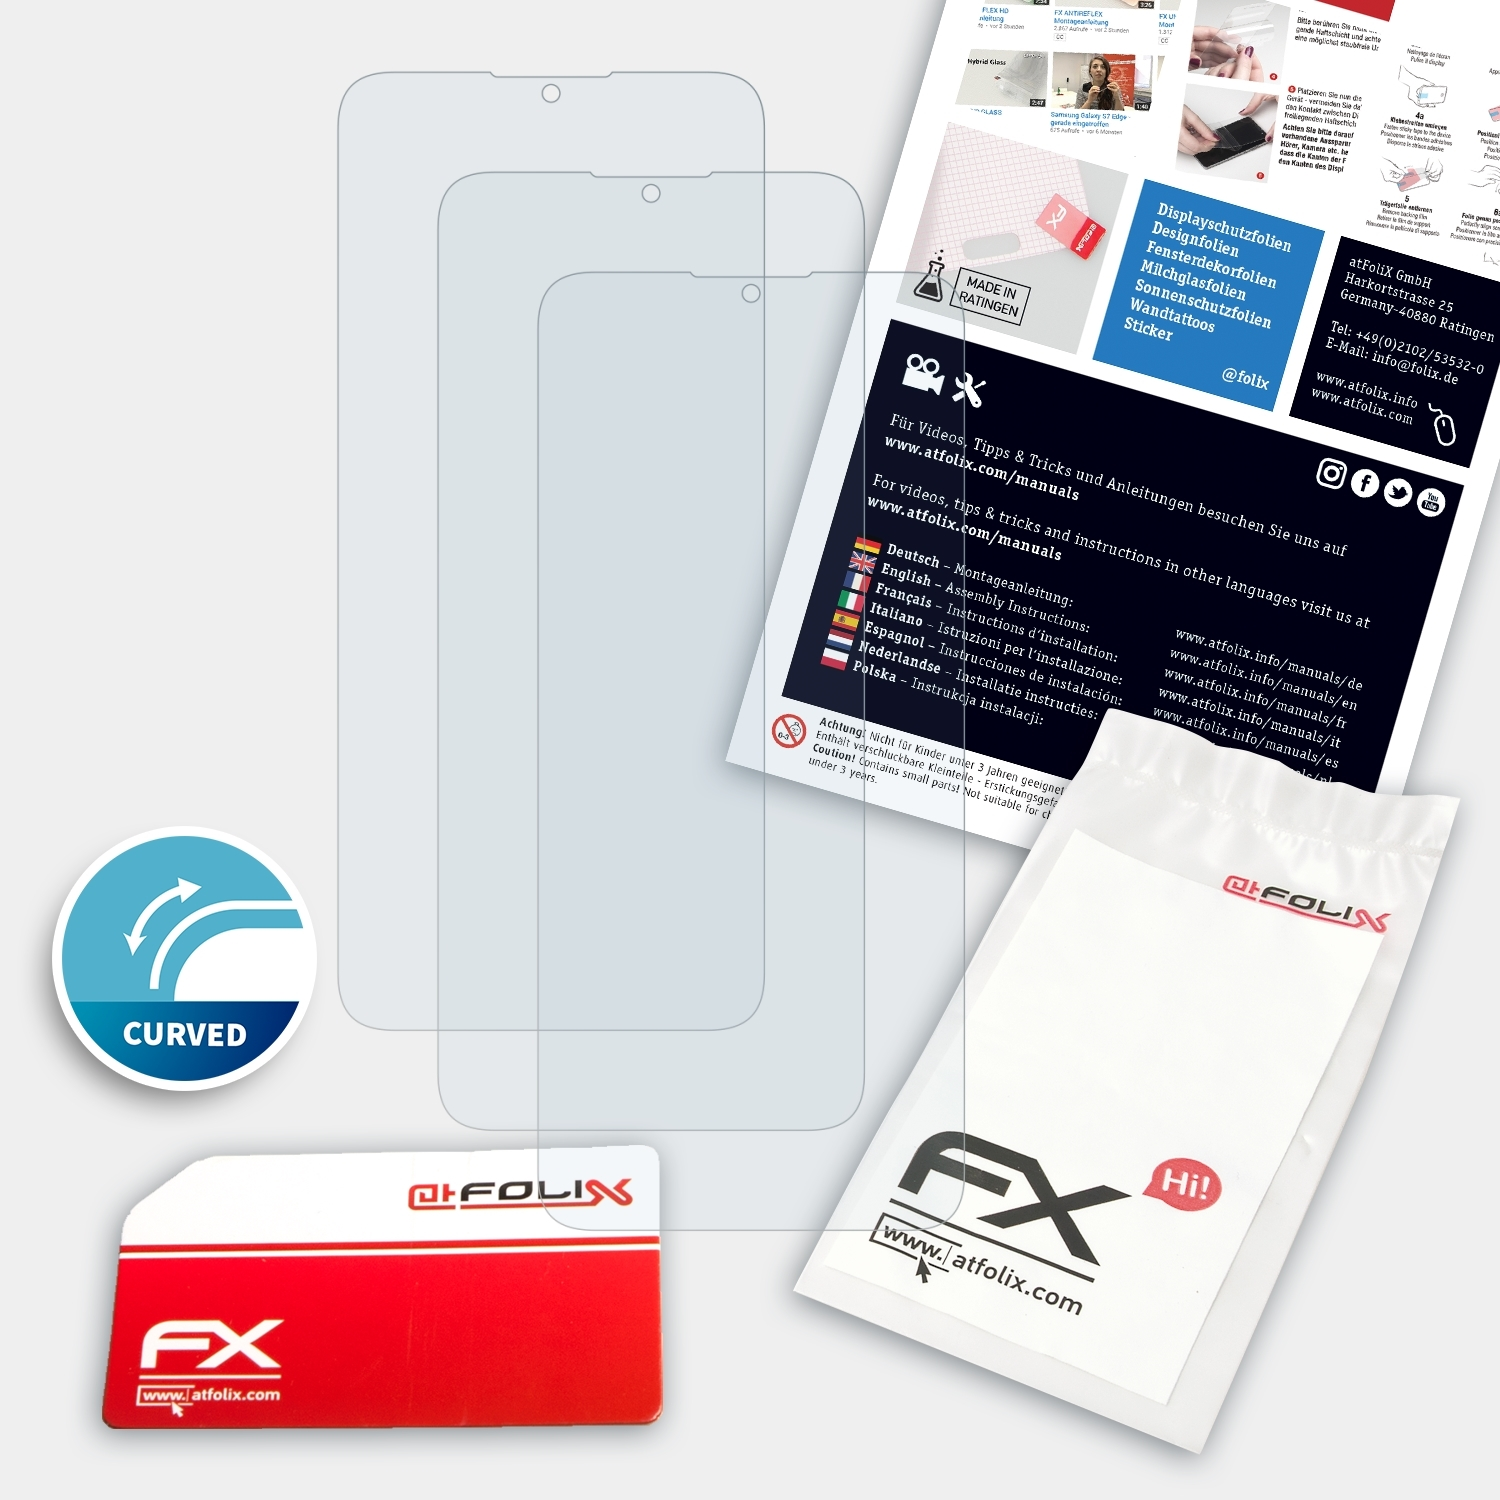 ATFOLIX 3x FX-ActiFleX Displayschutz(für Alcatel 1S (2021))